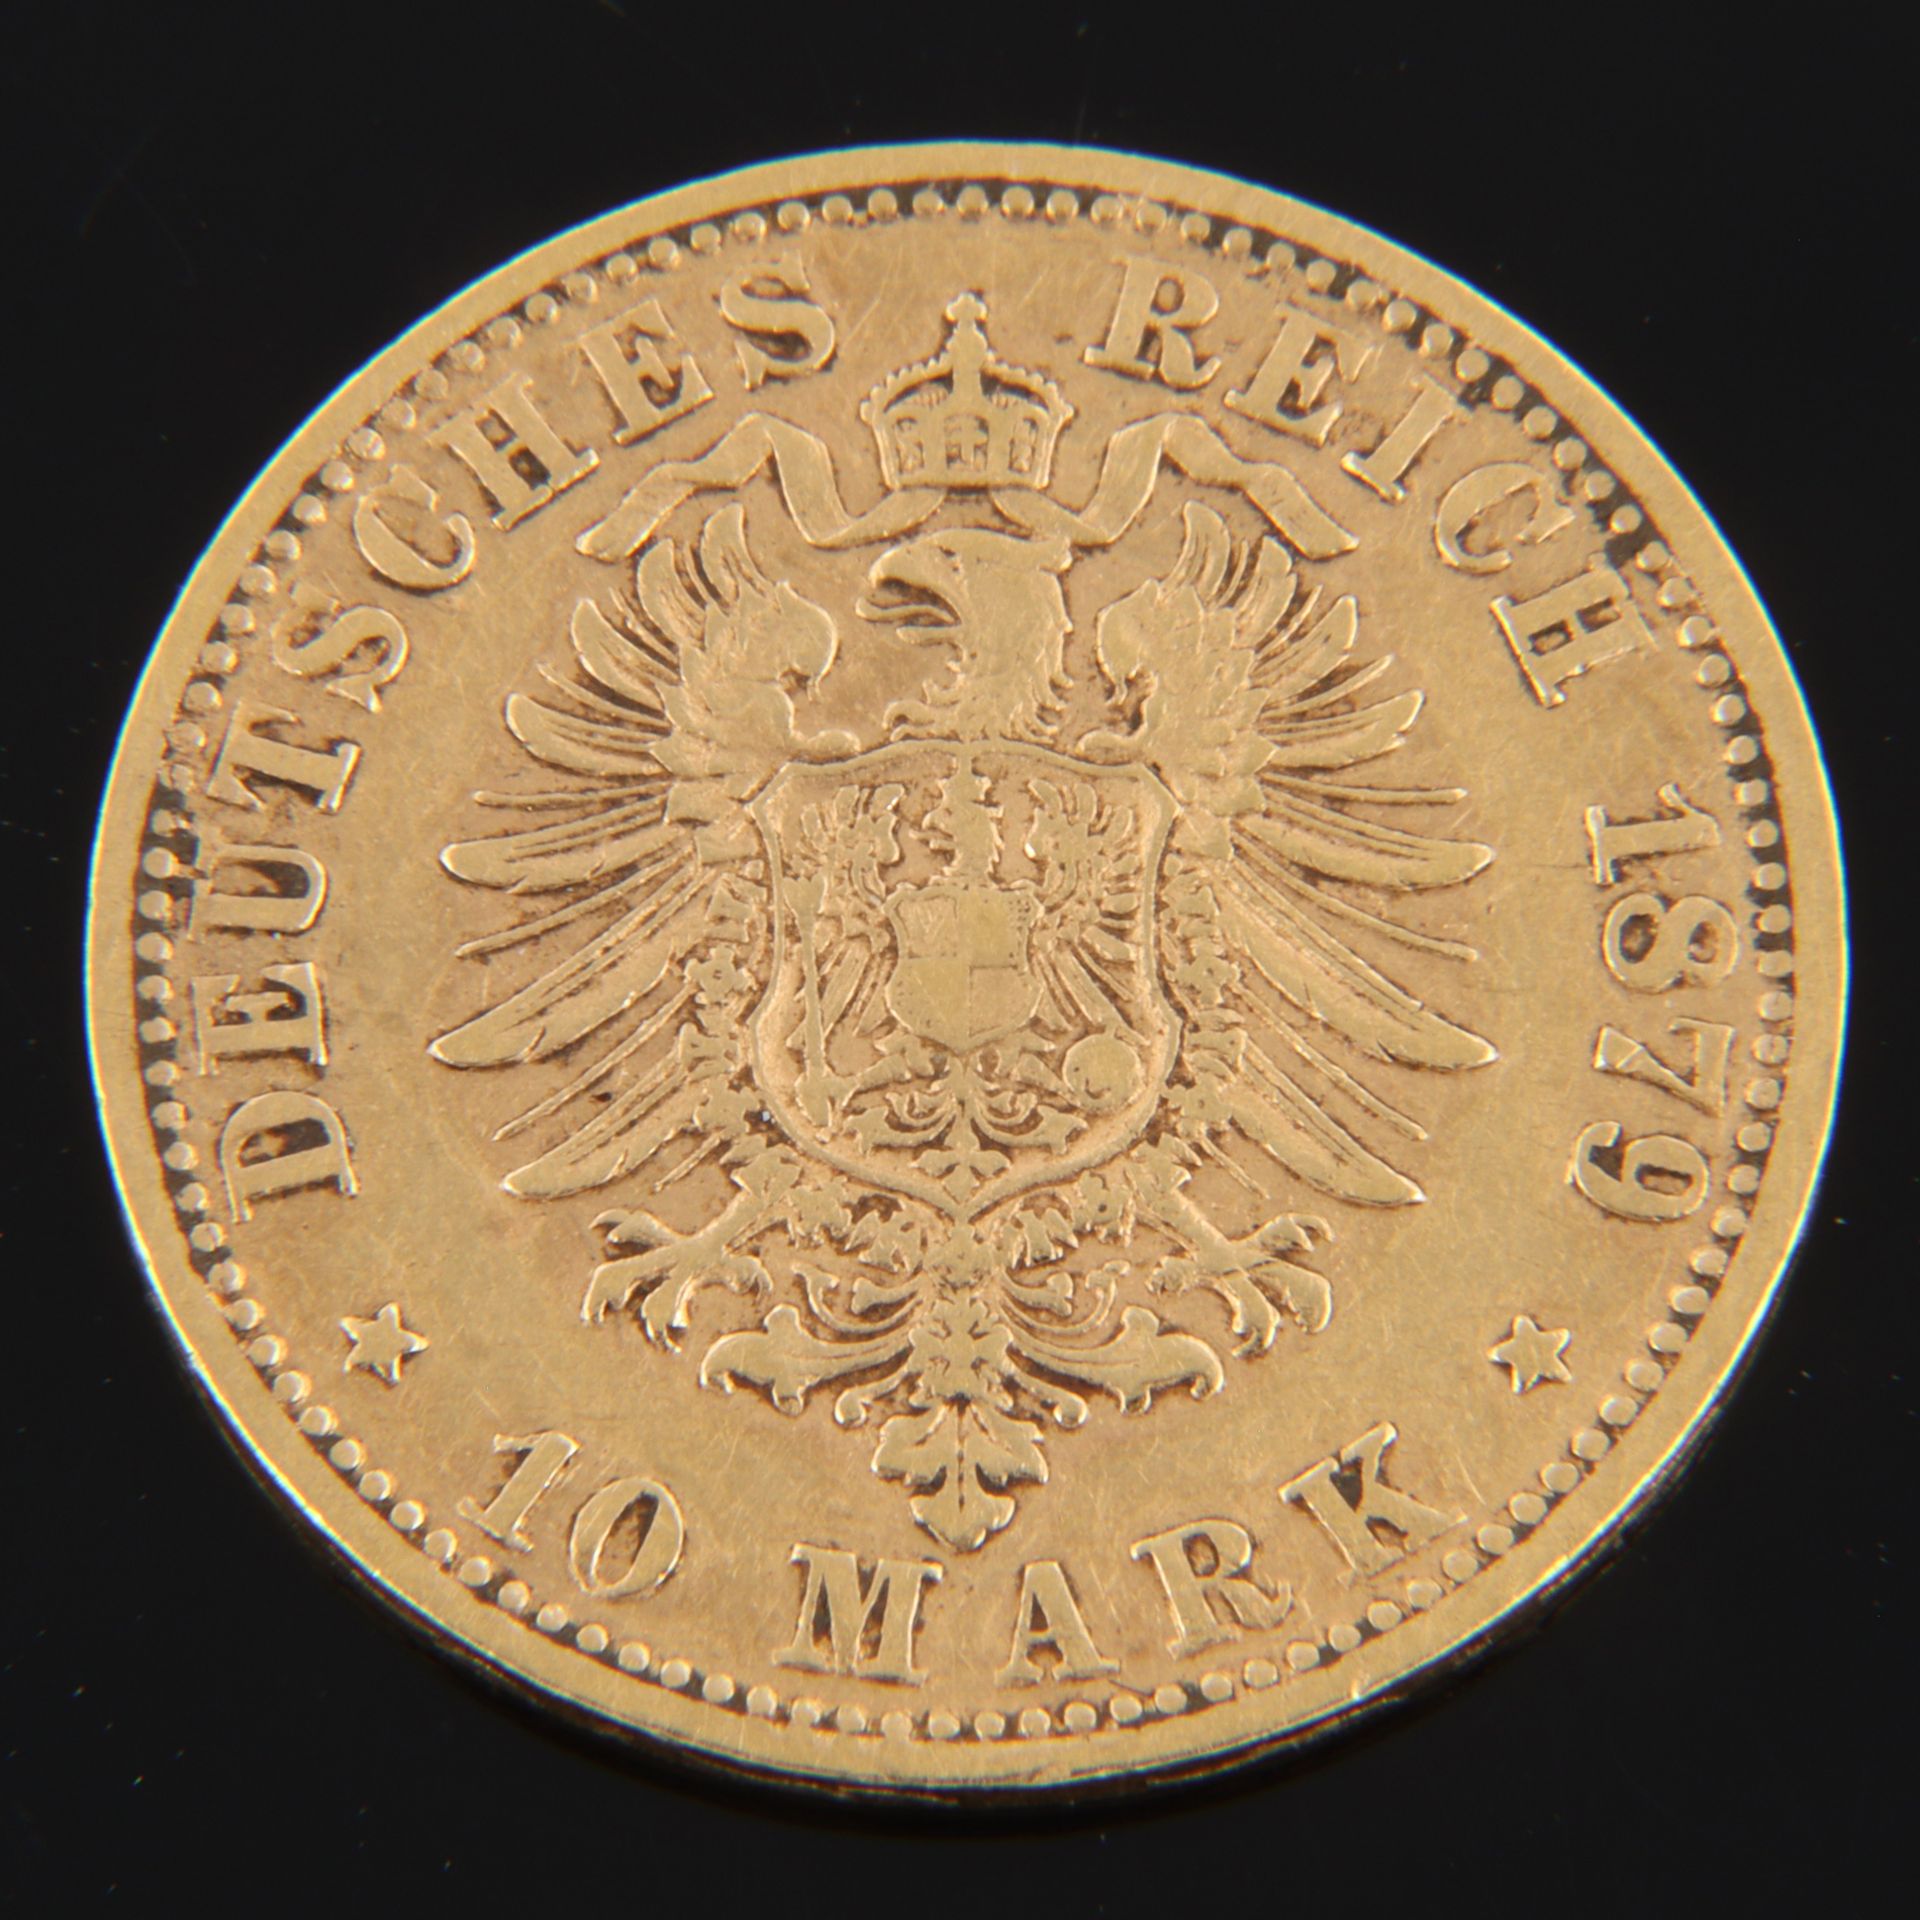 Goldmünze - 10 Mark - Image 2 of 2